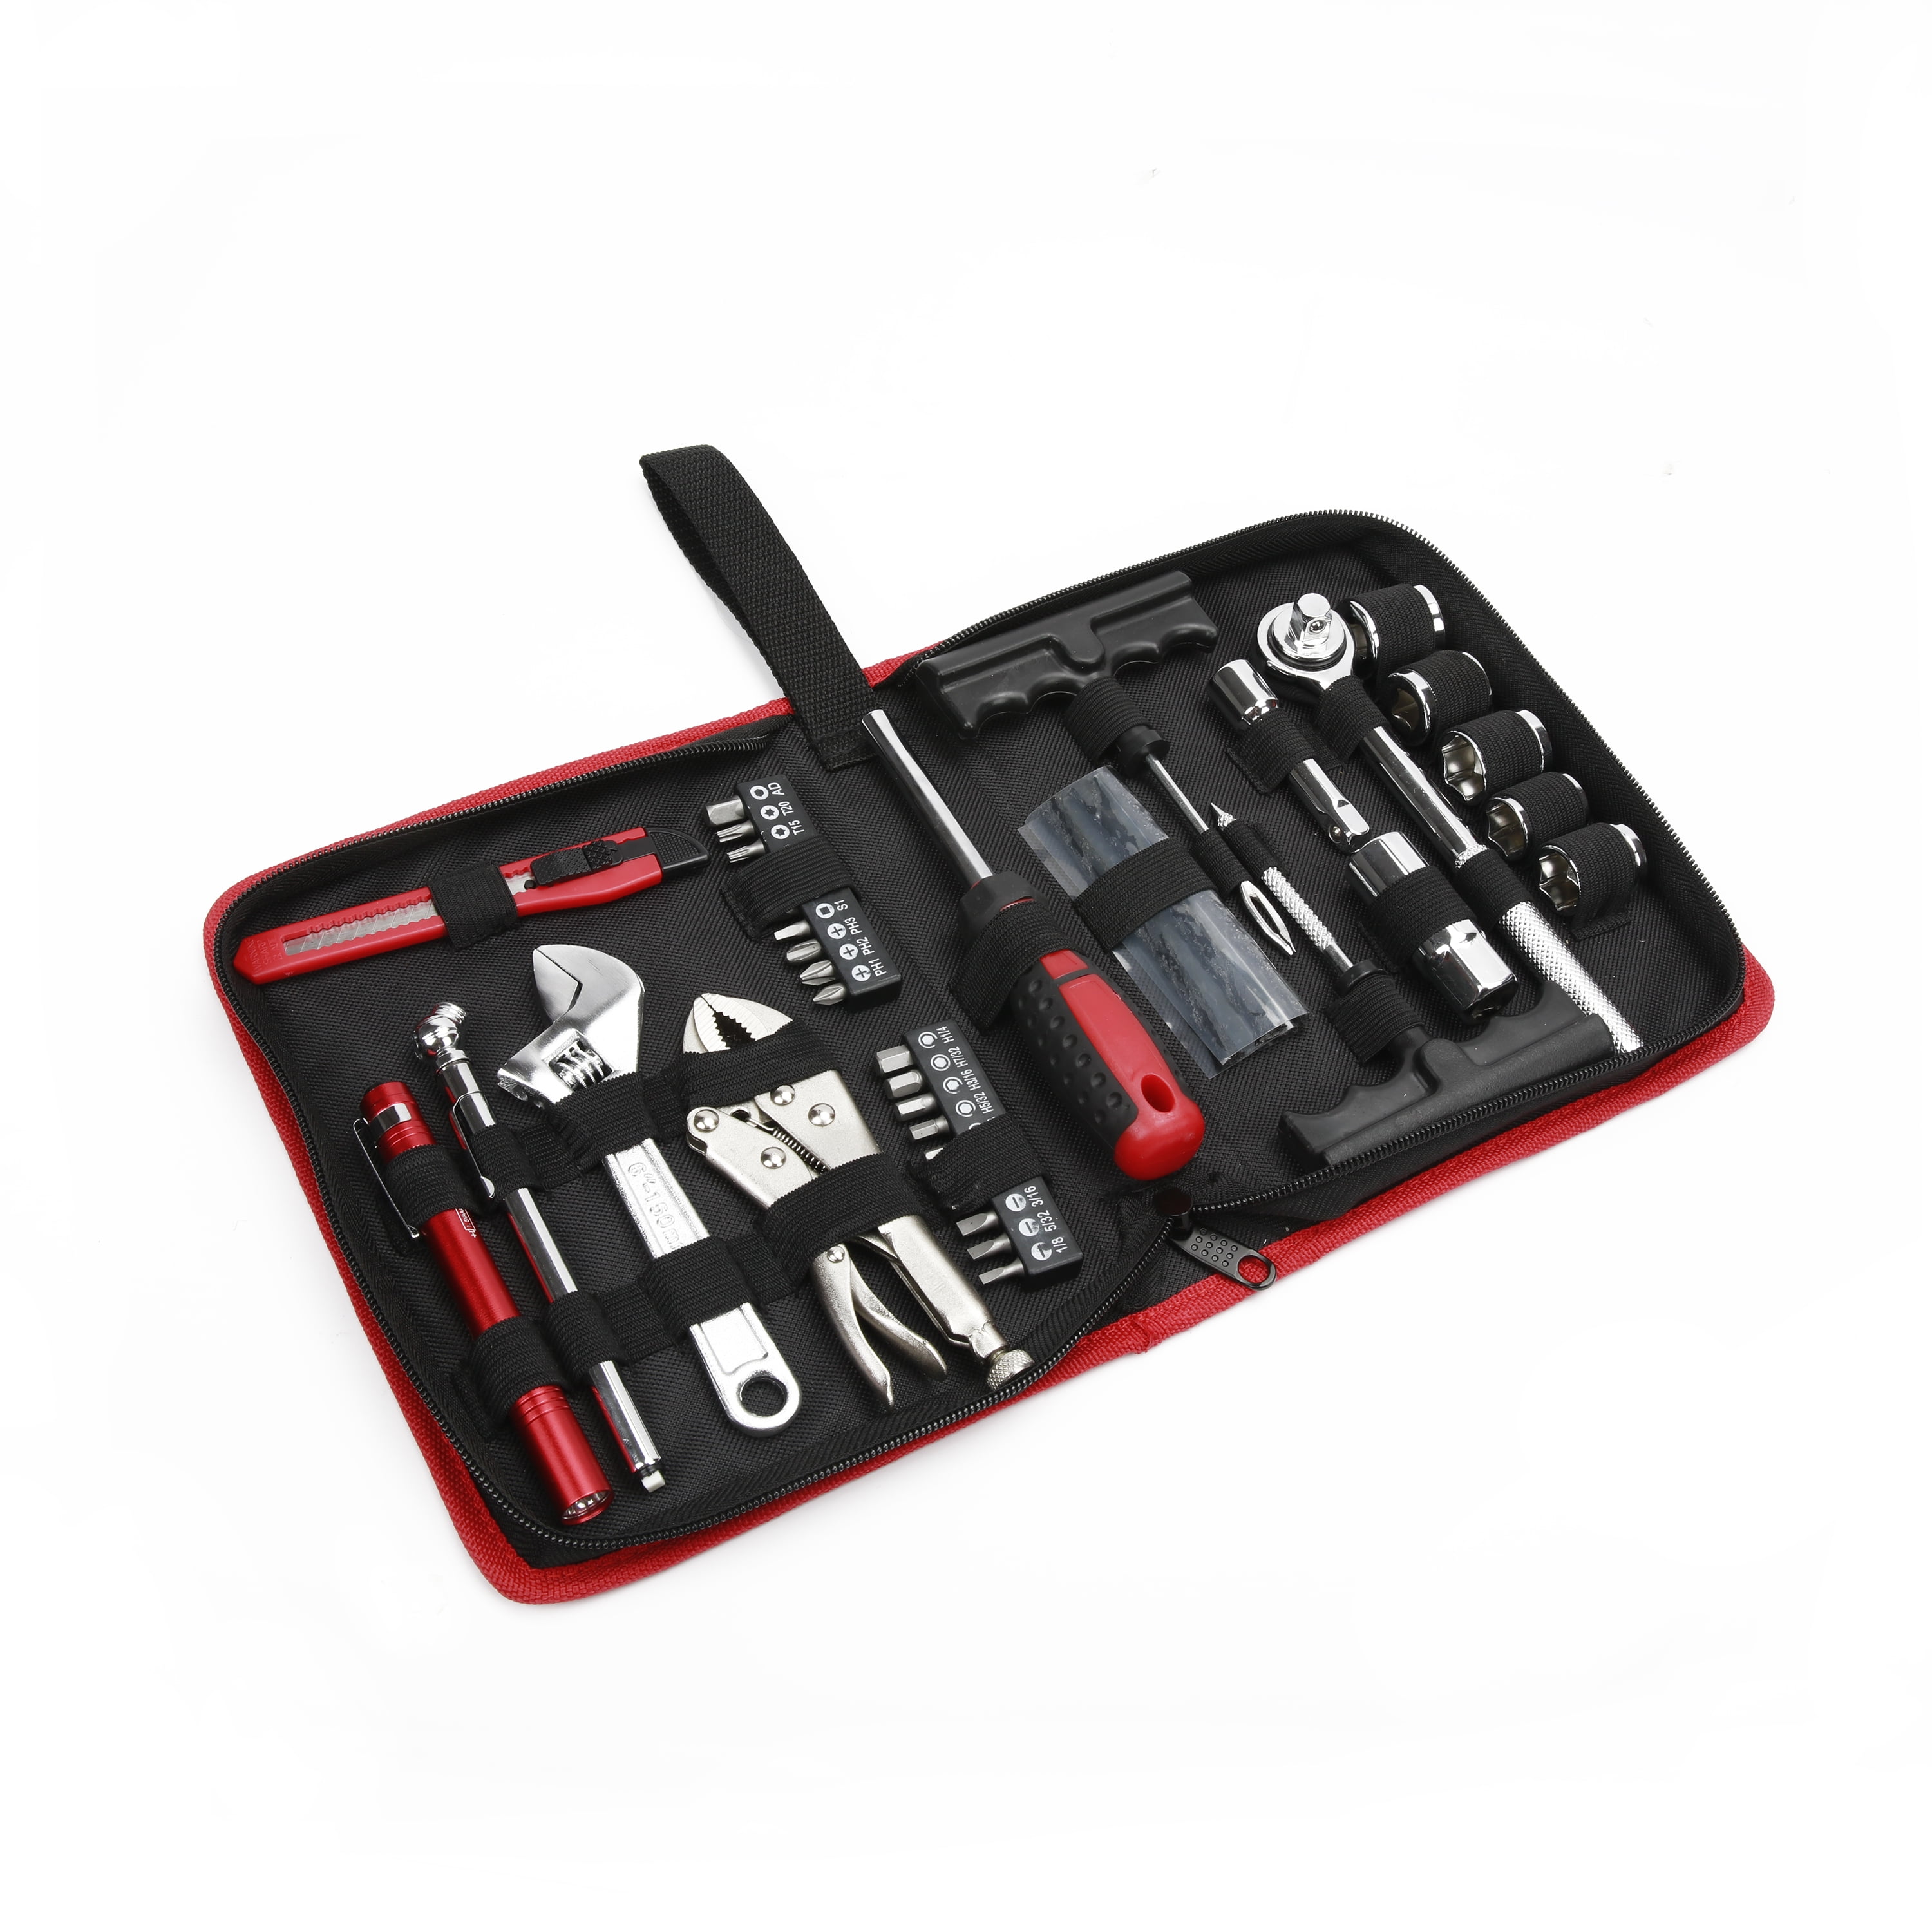 Everyday Carry - 33/M/Belgium/Mechanic - Small car tool kit.